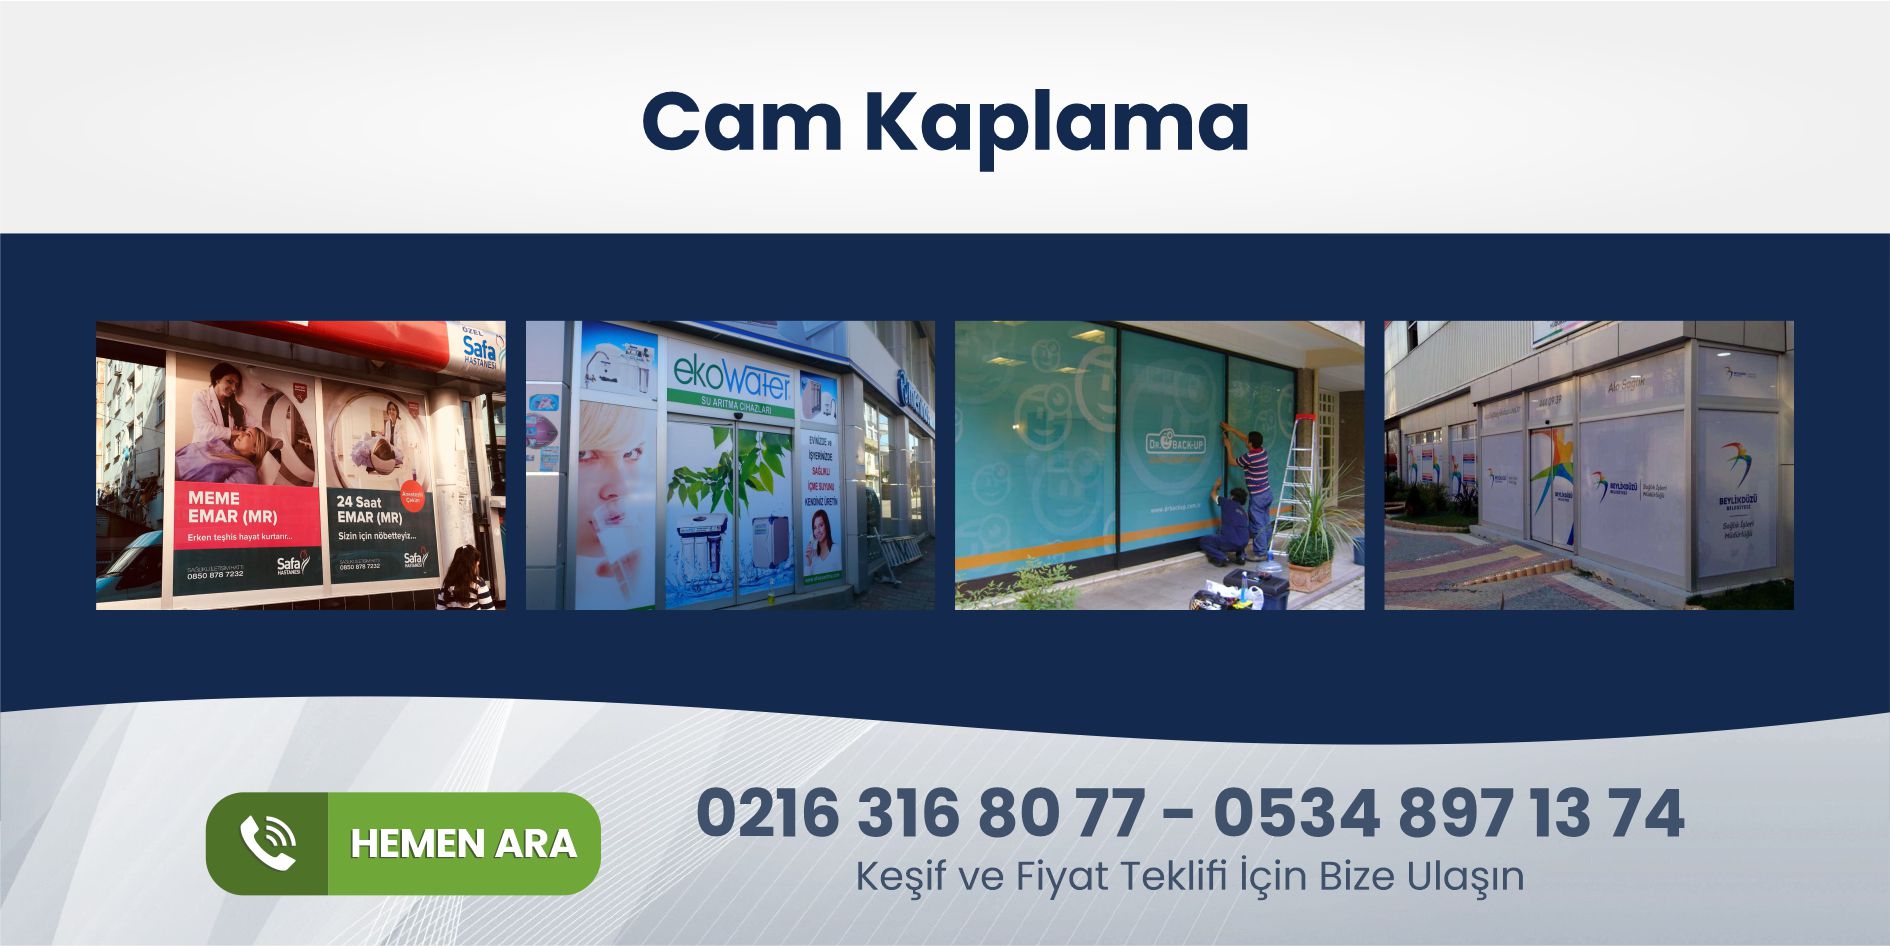 You are currently viewing Kadıköy Cama Folyo Kaplama